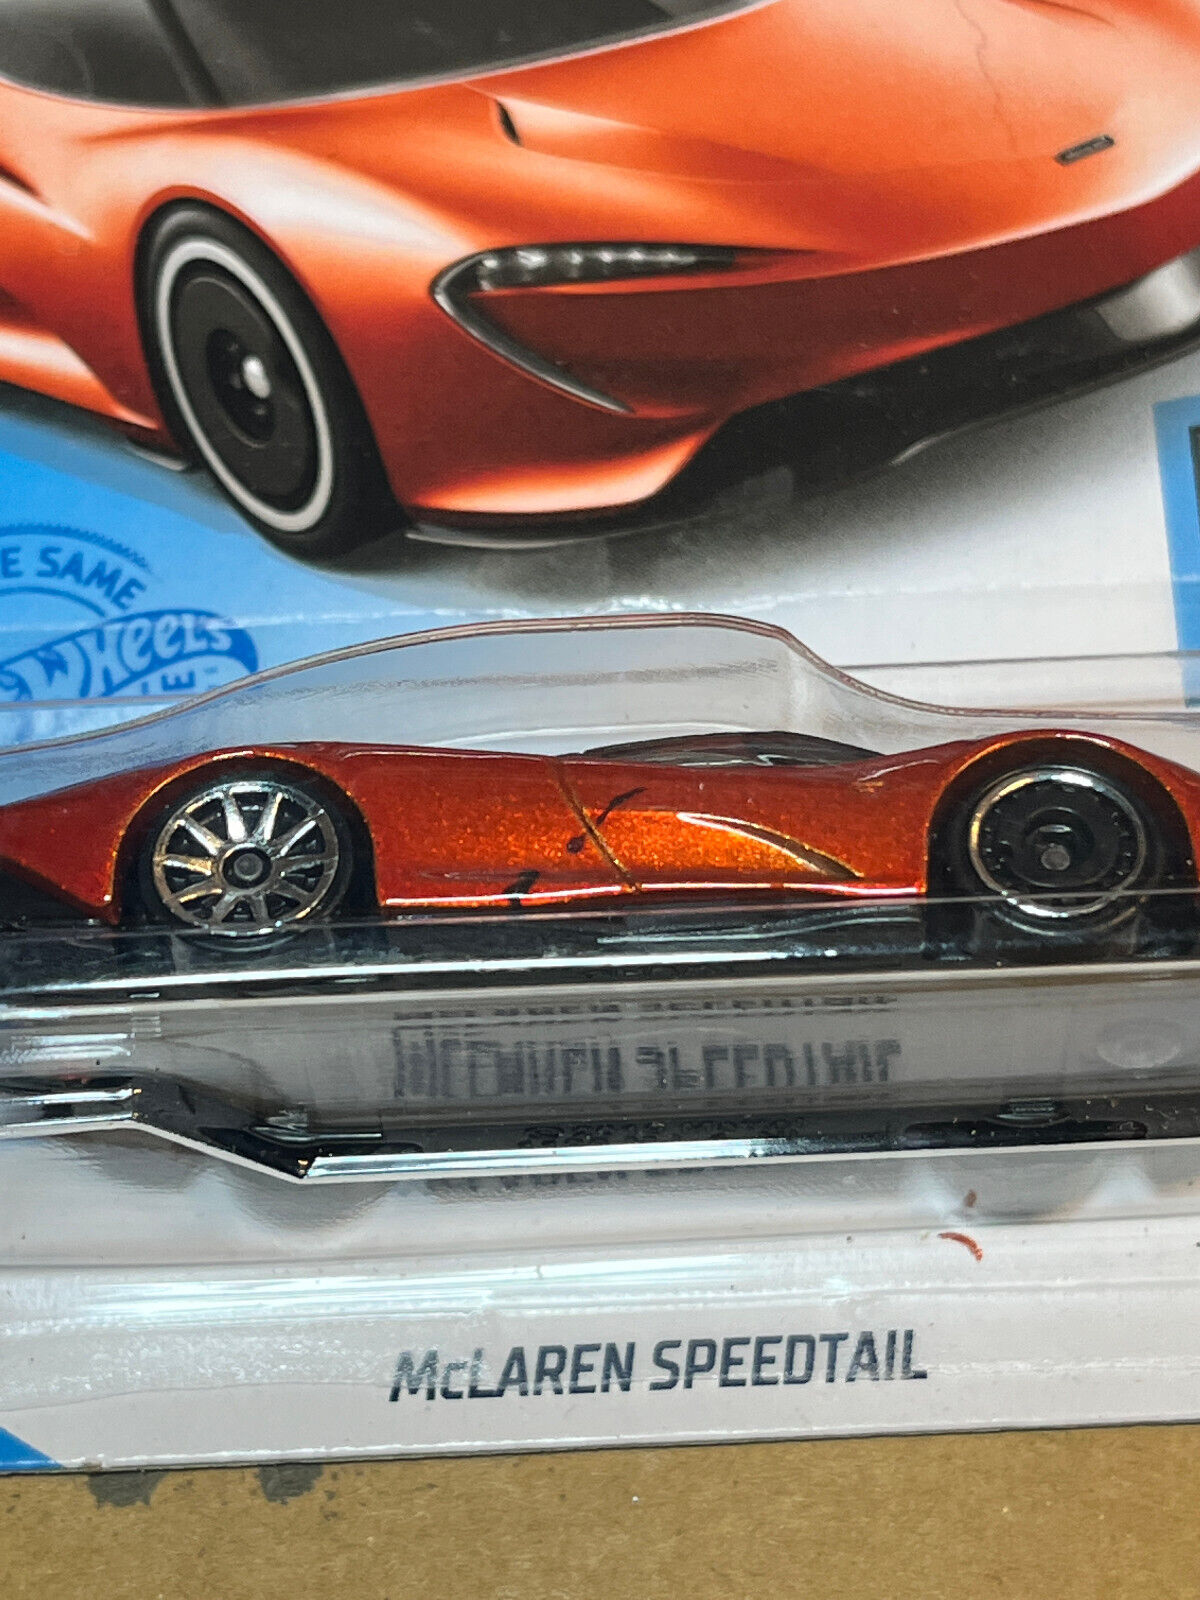 2021 Hot Wheels Factory Fresh #7/10 McLaren Speedtail Orange Paint ERROR